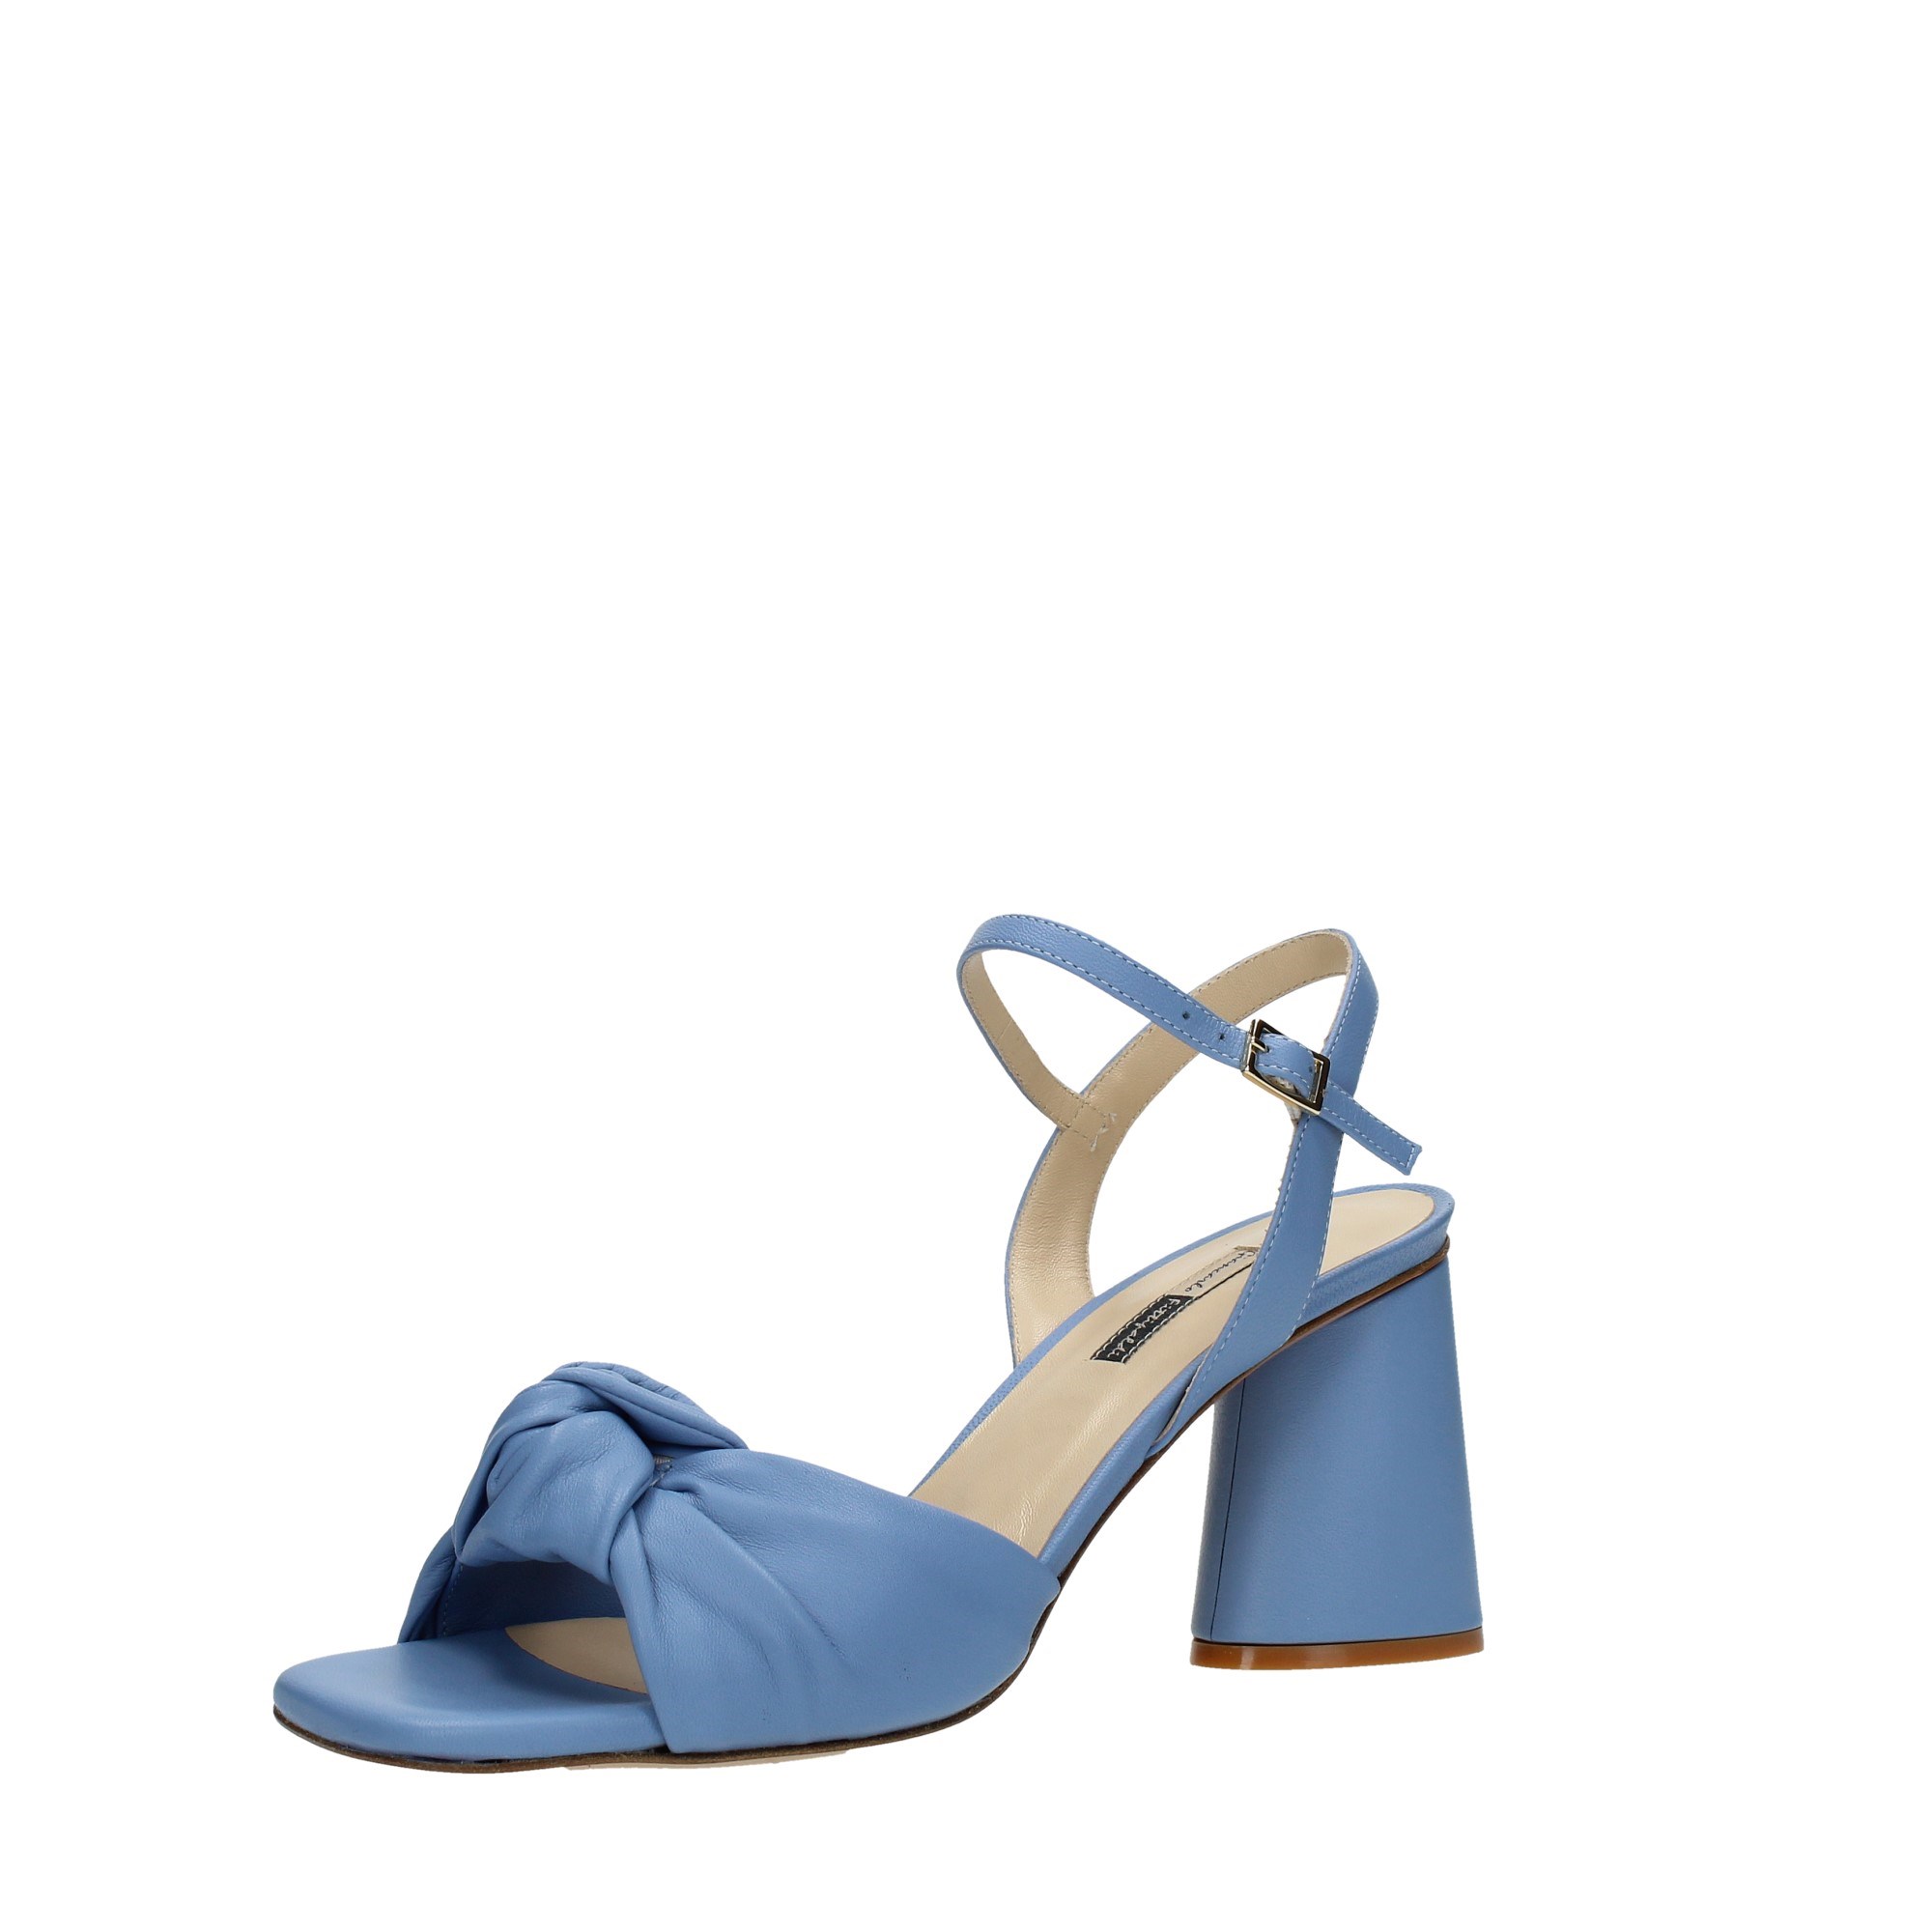 Giancarlo Fittipaldi Shoes Women Sandals 1004